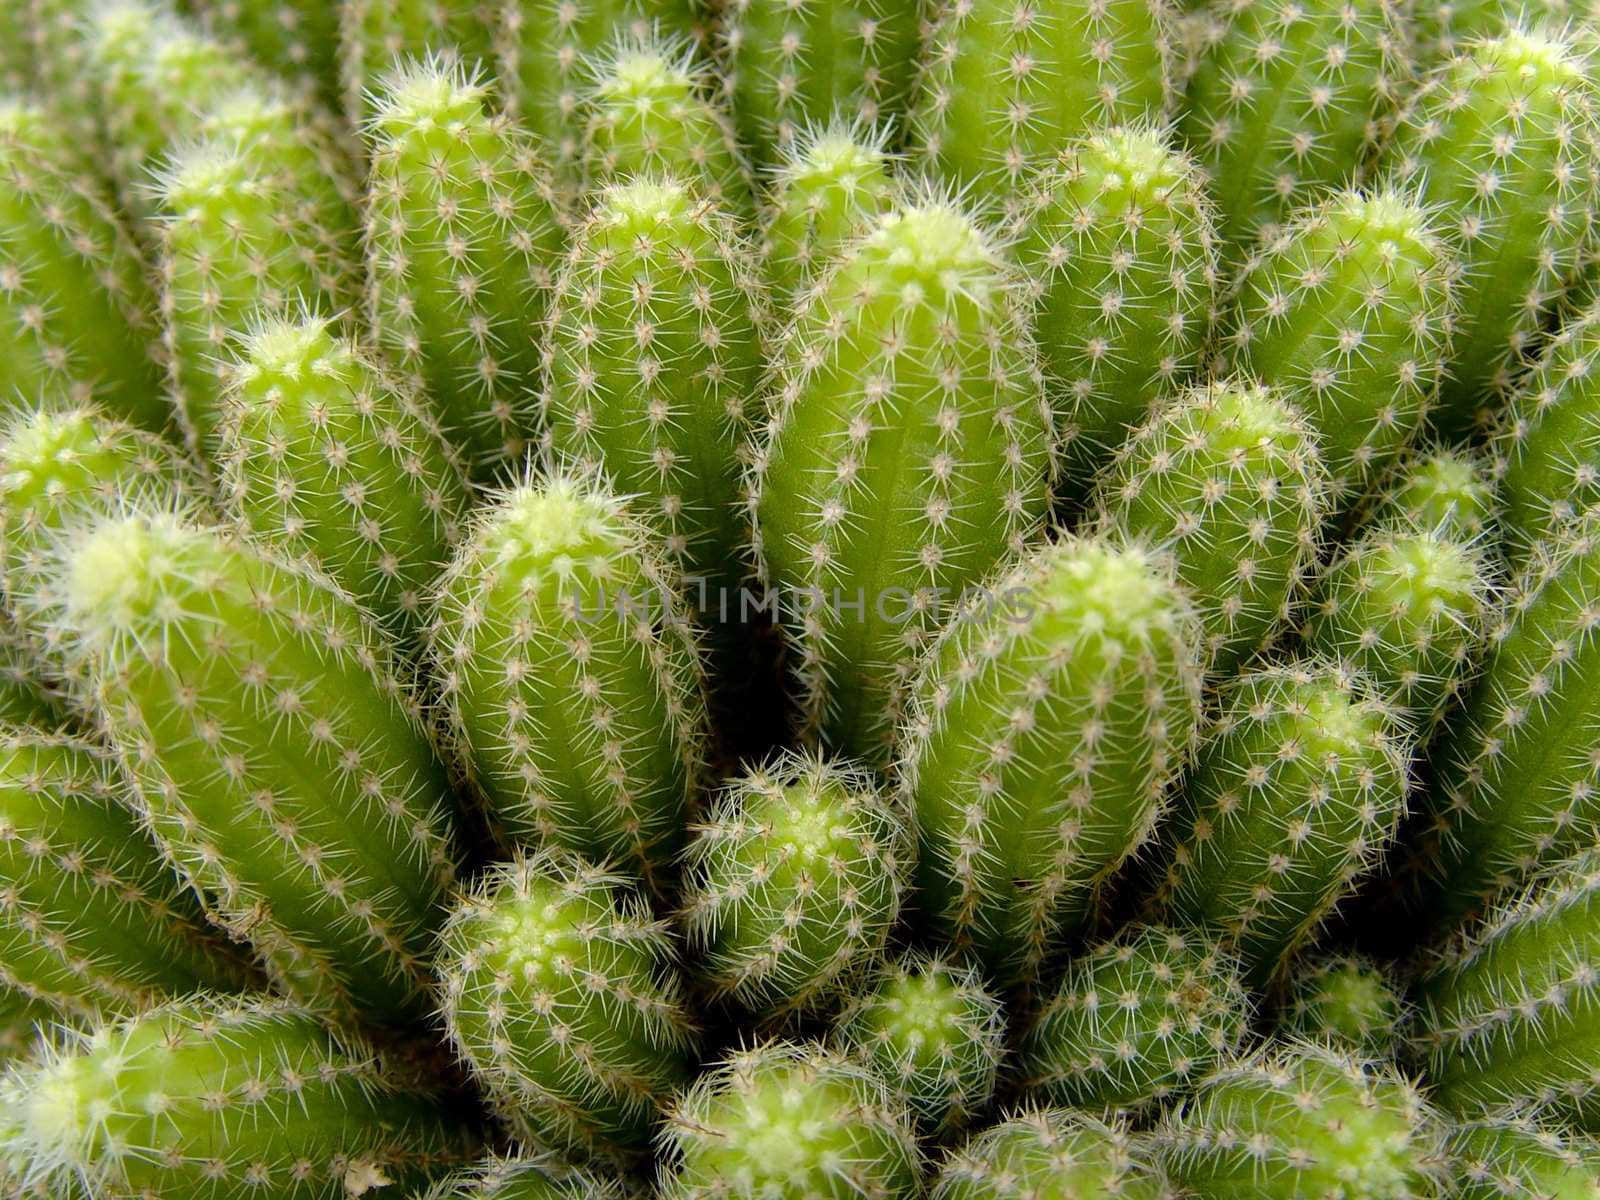 Cactus by whitechild